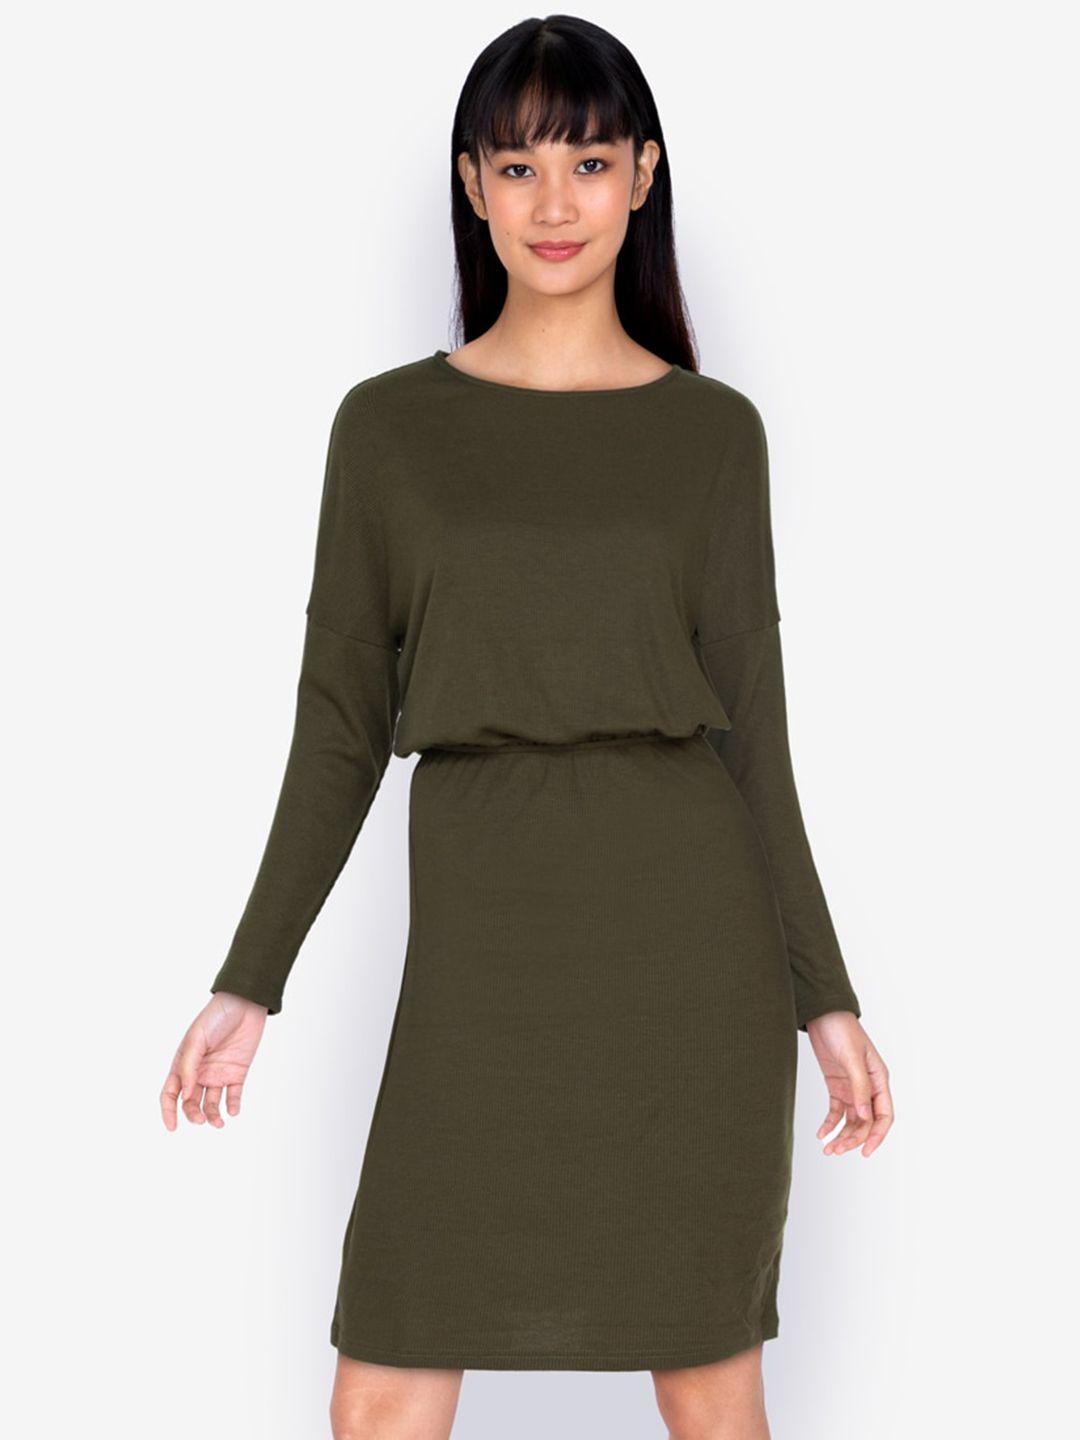 zalora basics dark green solid boat neck blouson dress